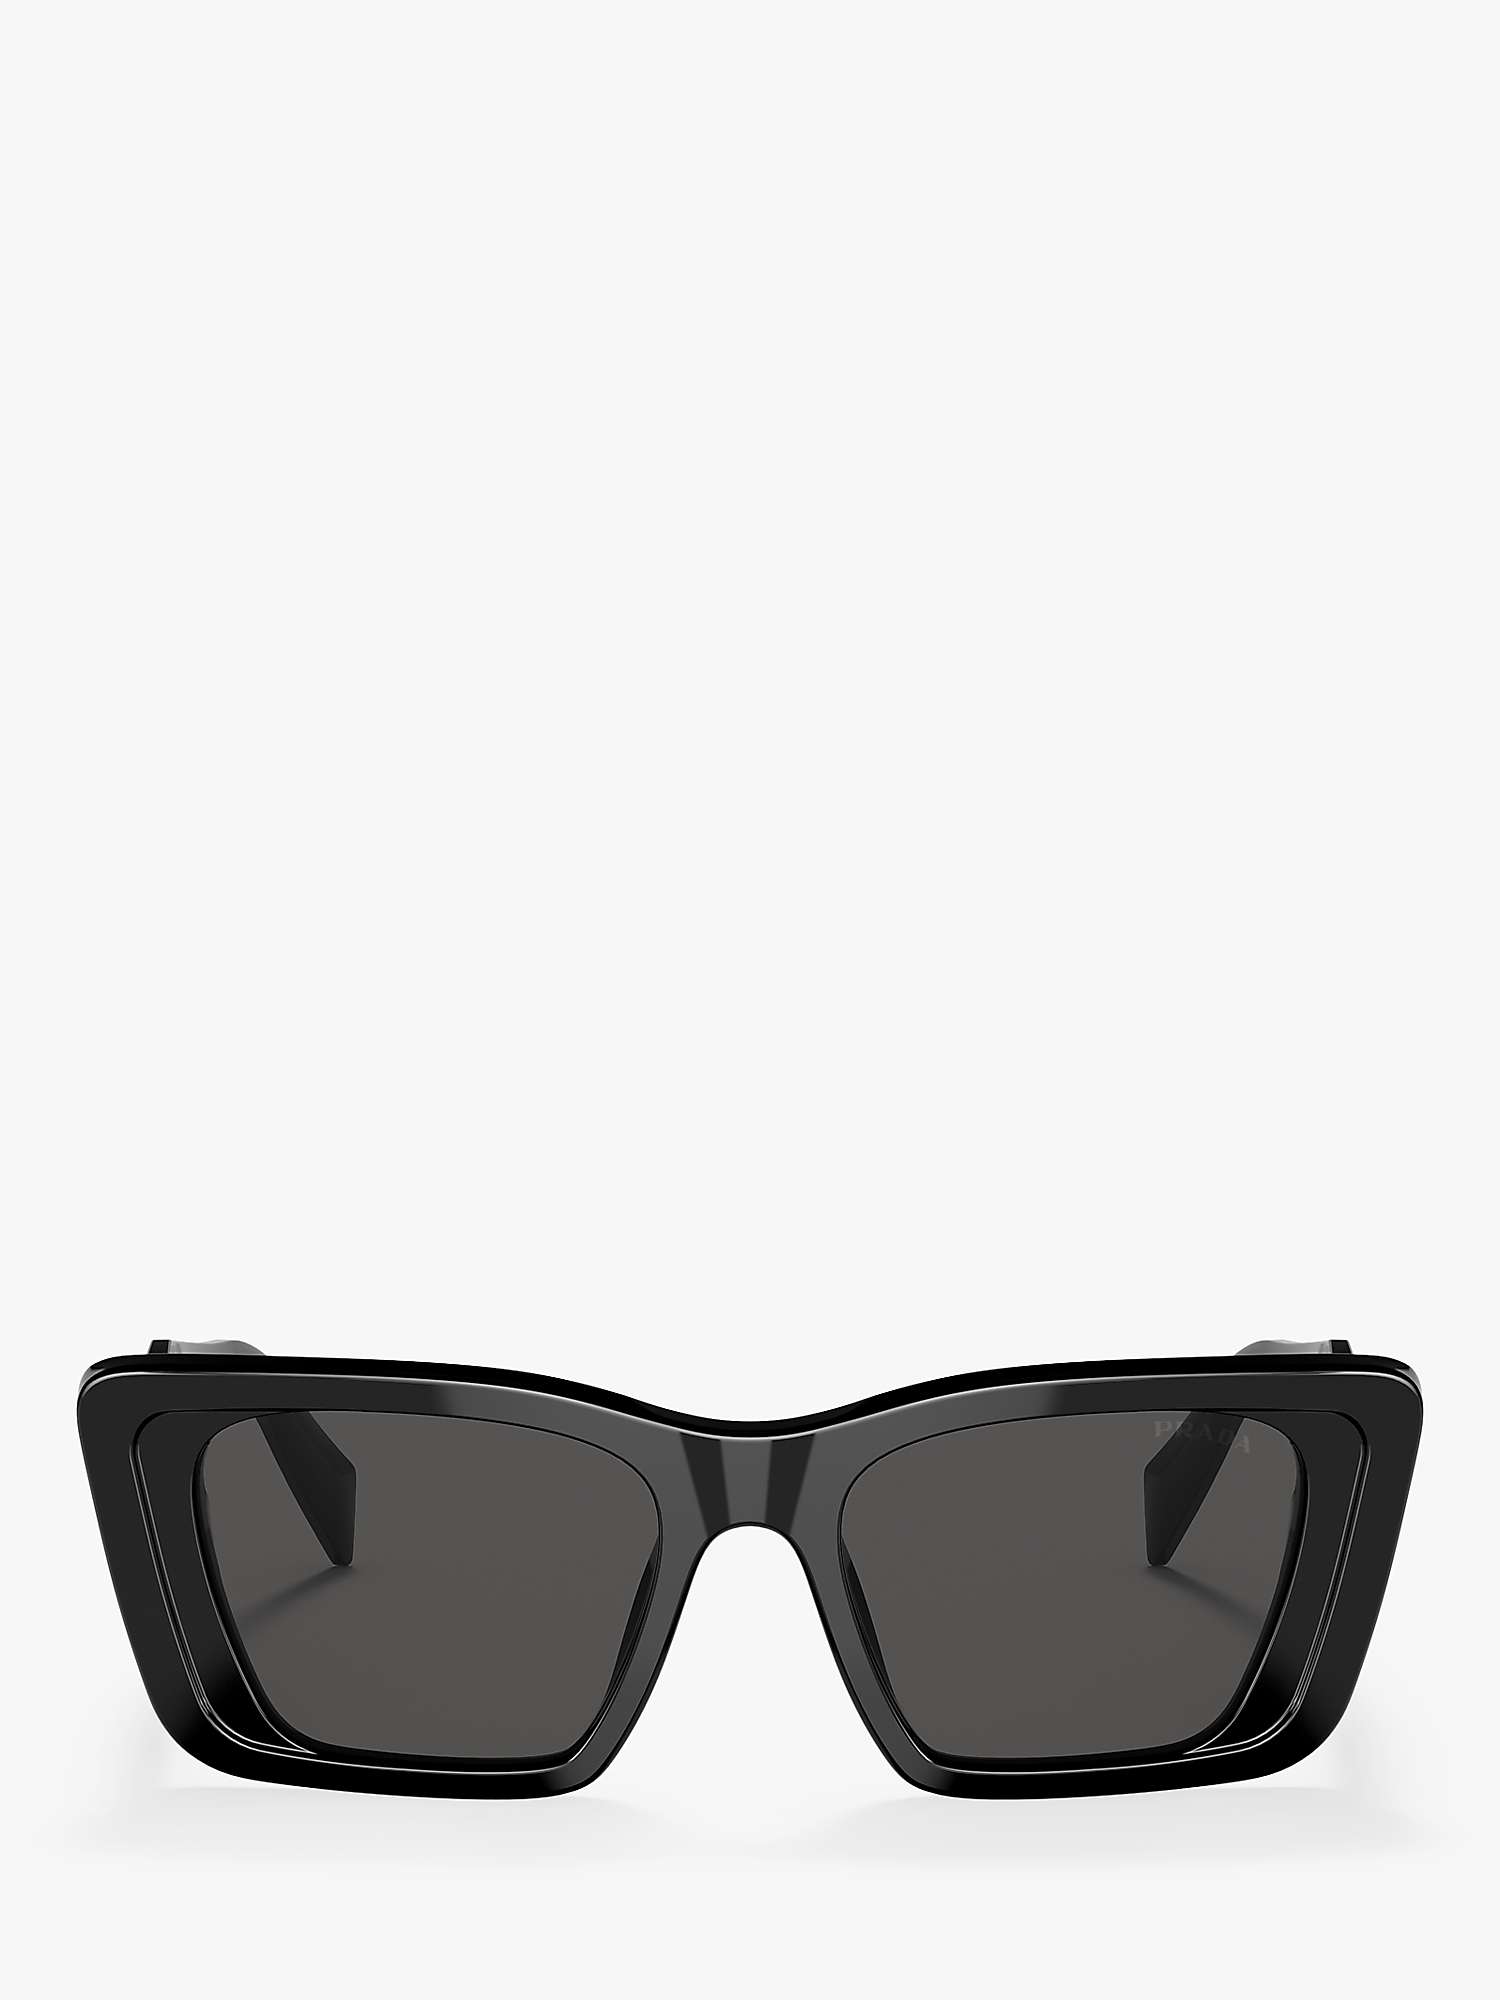 Prada PR 08YS Women's Butterfly Sunglasses, Black at John Lewis & Partners